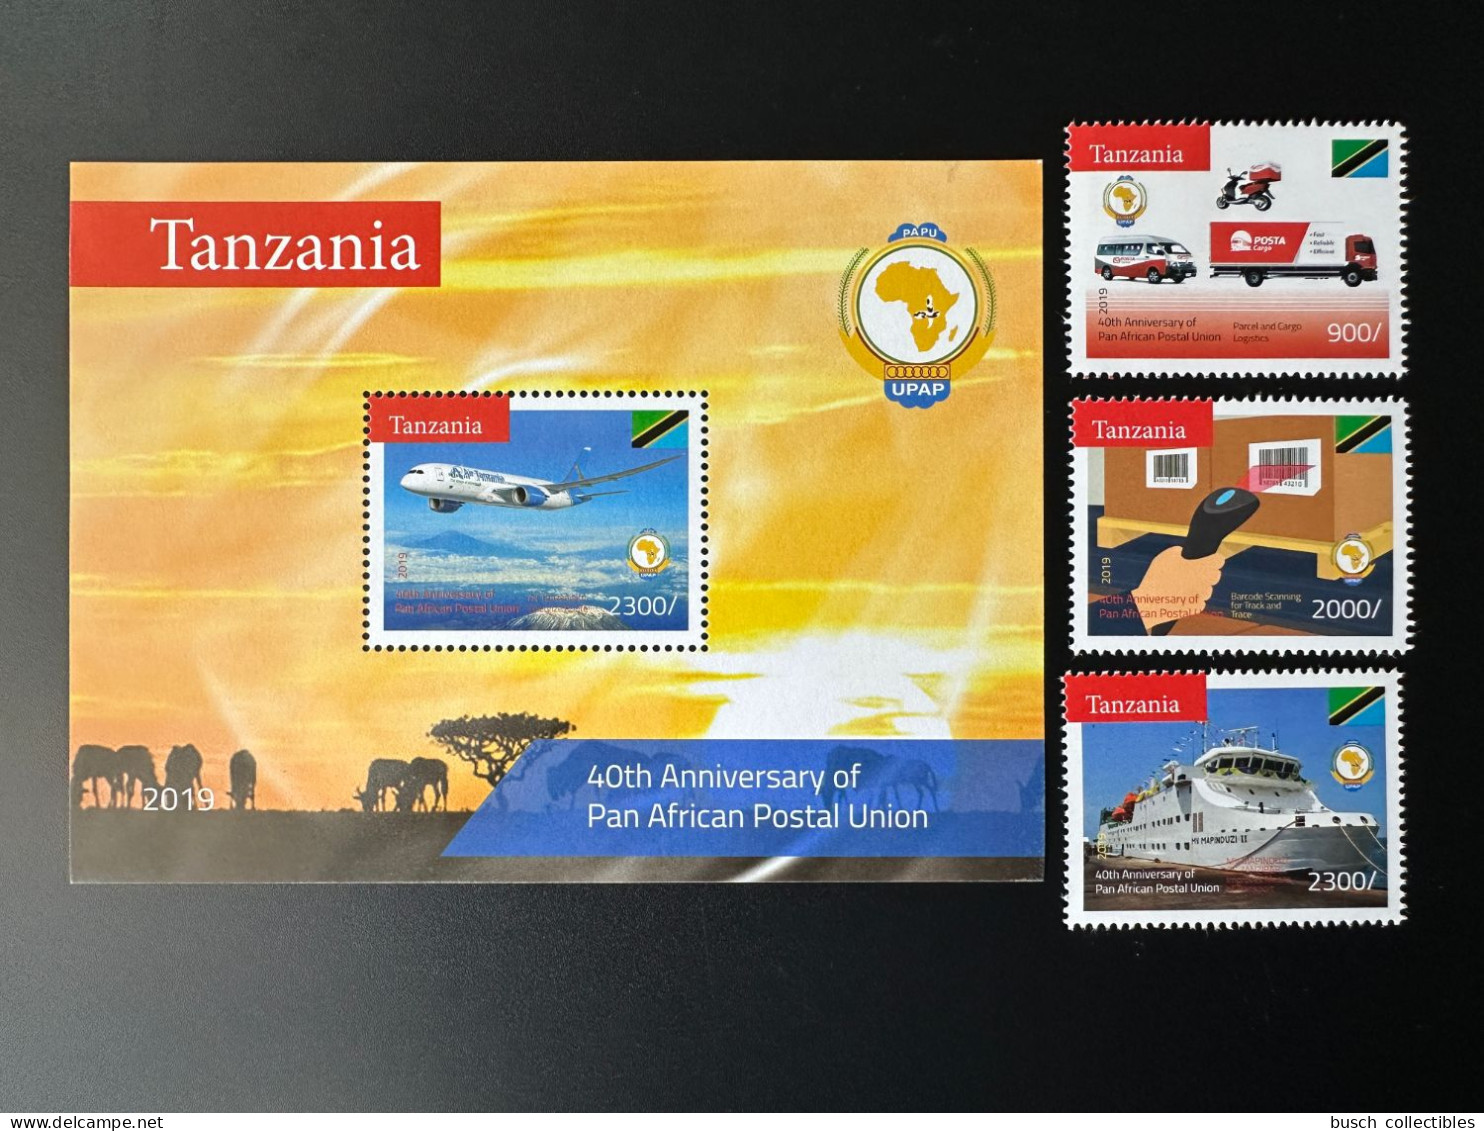 Tanzania Tanzanie Tansania 2019 / 2020 Mi. 5447 - 5449 Bl. 716 PAPU UPAP 40th Anniversary Airplane Flugzeug Avion Ship - Tanzanie (1964-...)